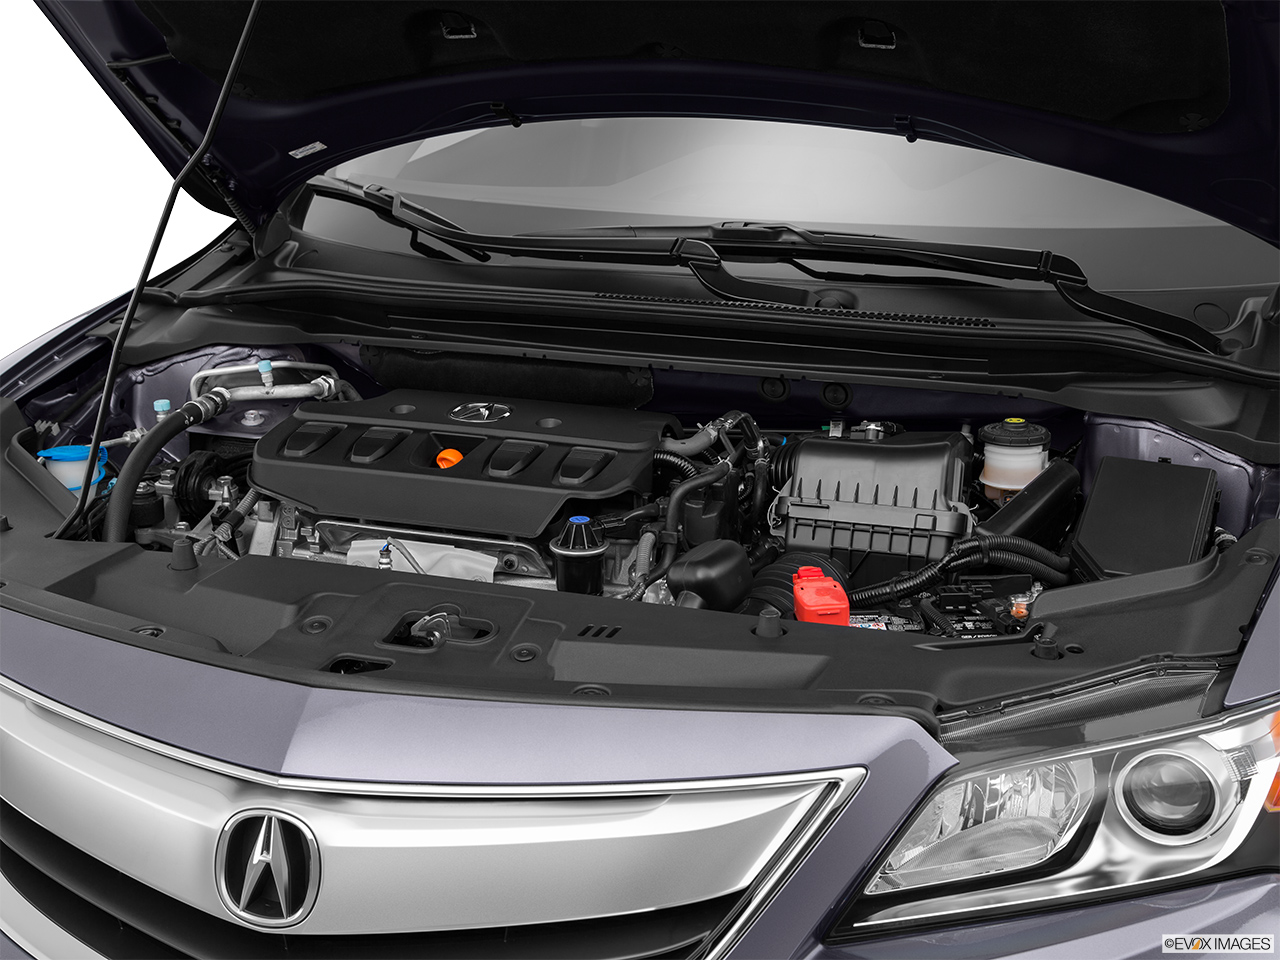 2015 Acura ILX 5-Speed Automatic Engine. 